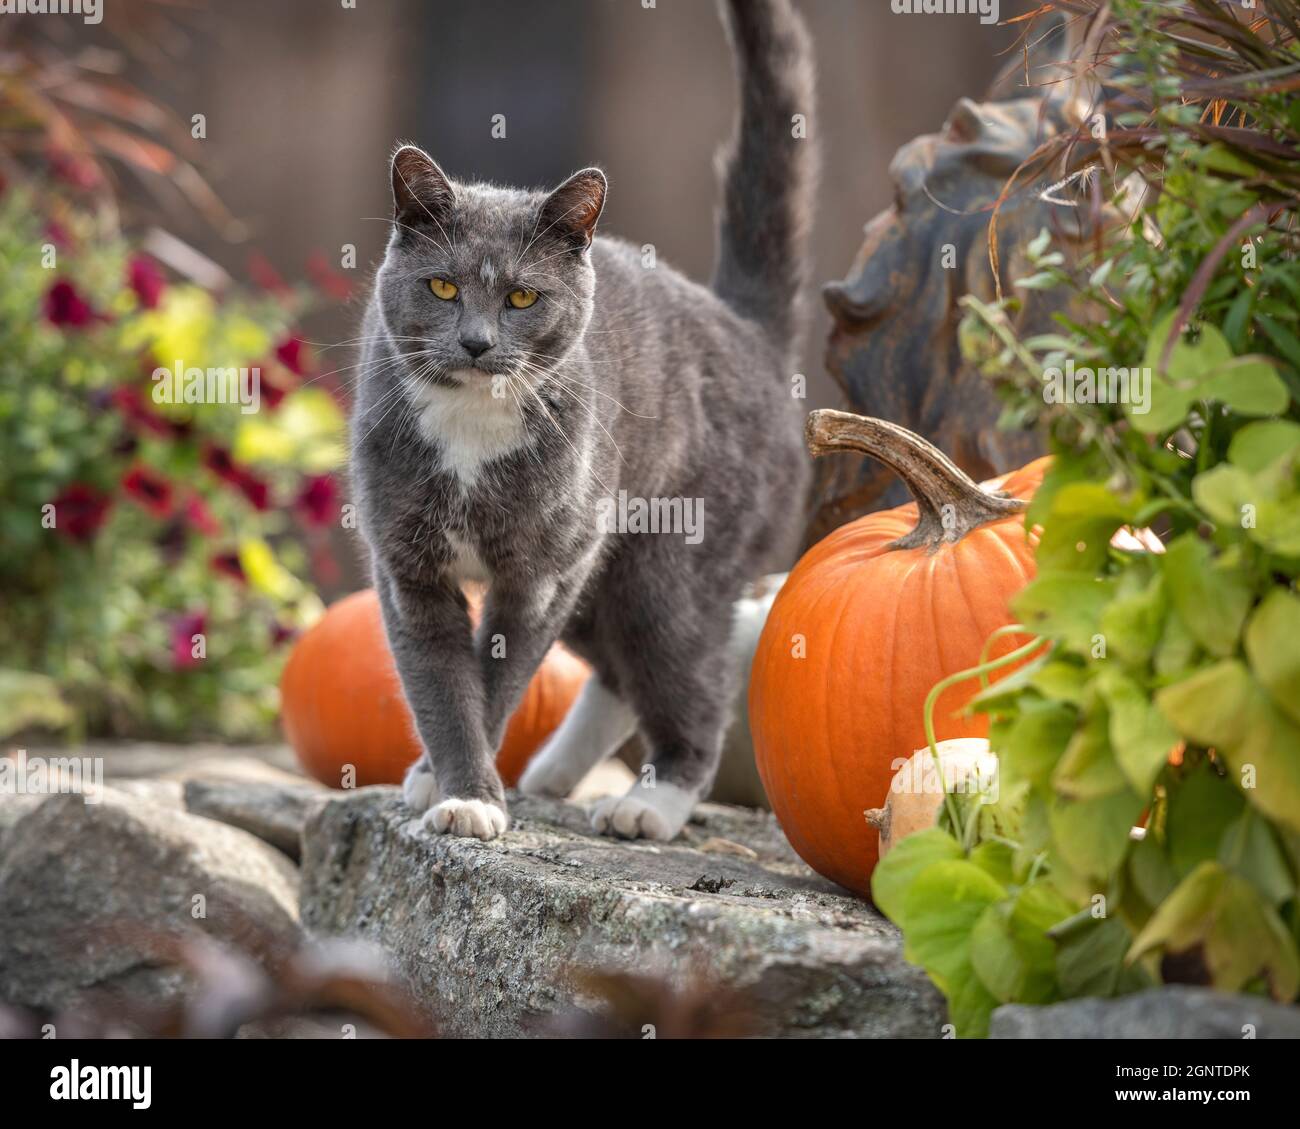 Gray Tuxedo cat standing on stone wall with orange pumpkins Stock Photo